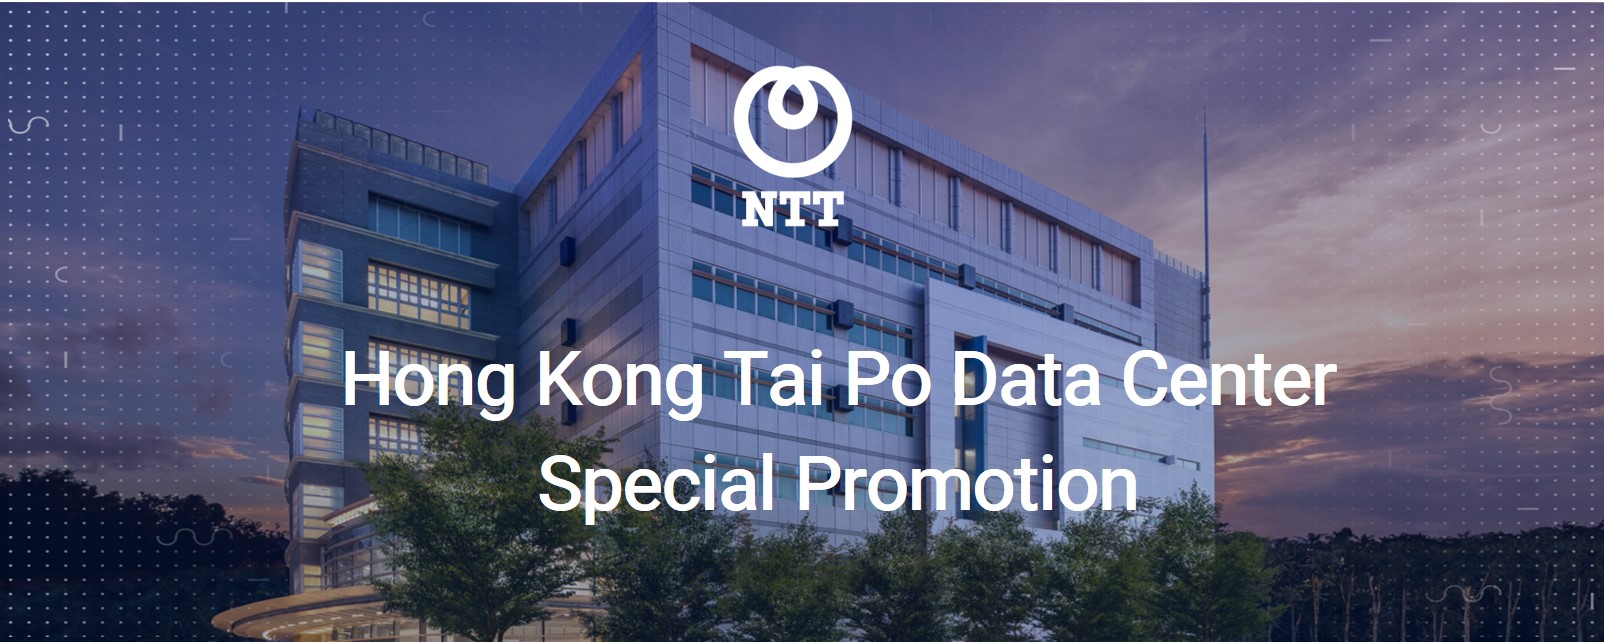 Hong Kong Tai Po Data Center Special Promotion